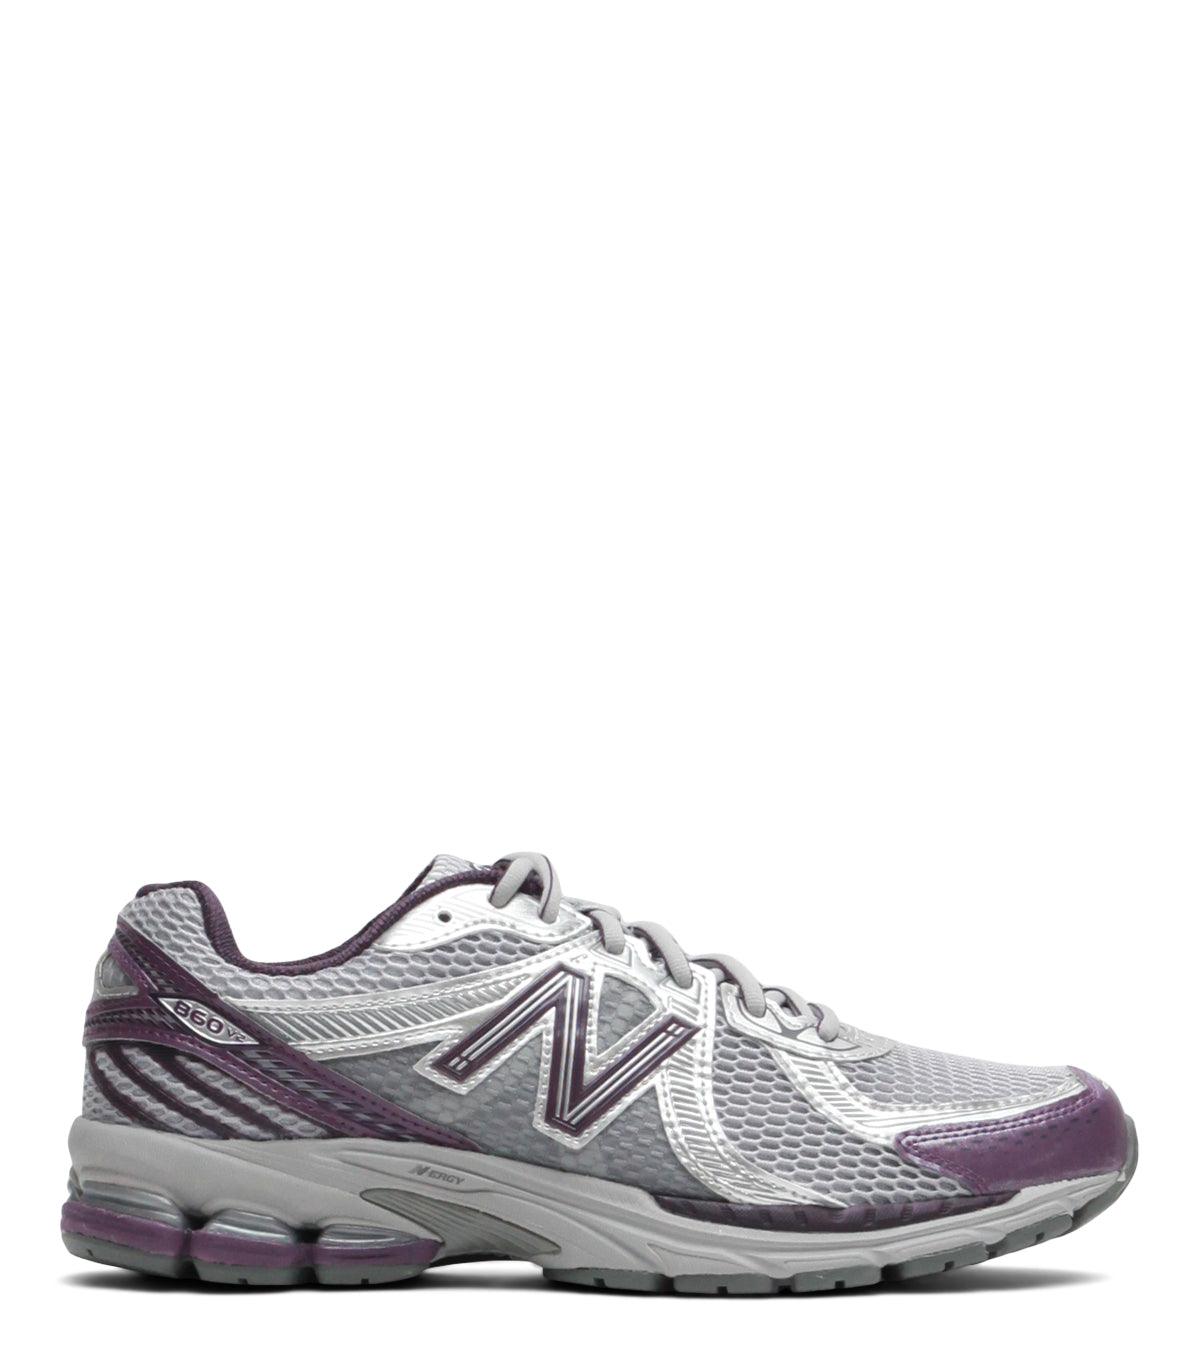 02.22.24 New Balance 860v2 Grey Purple